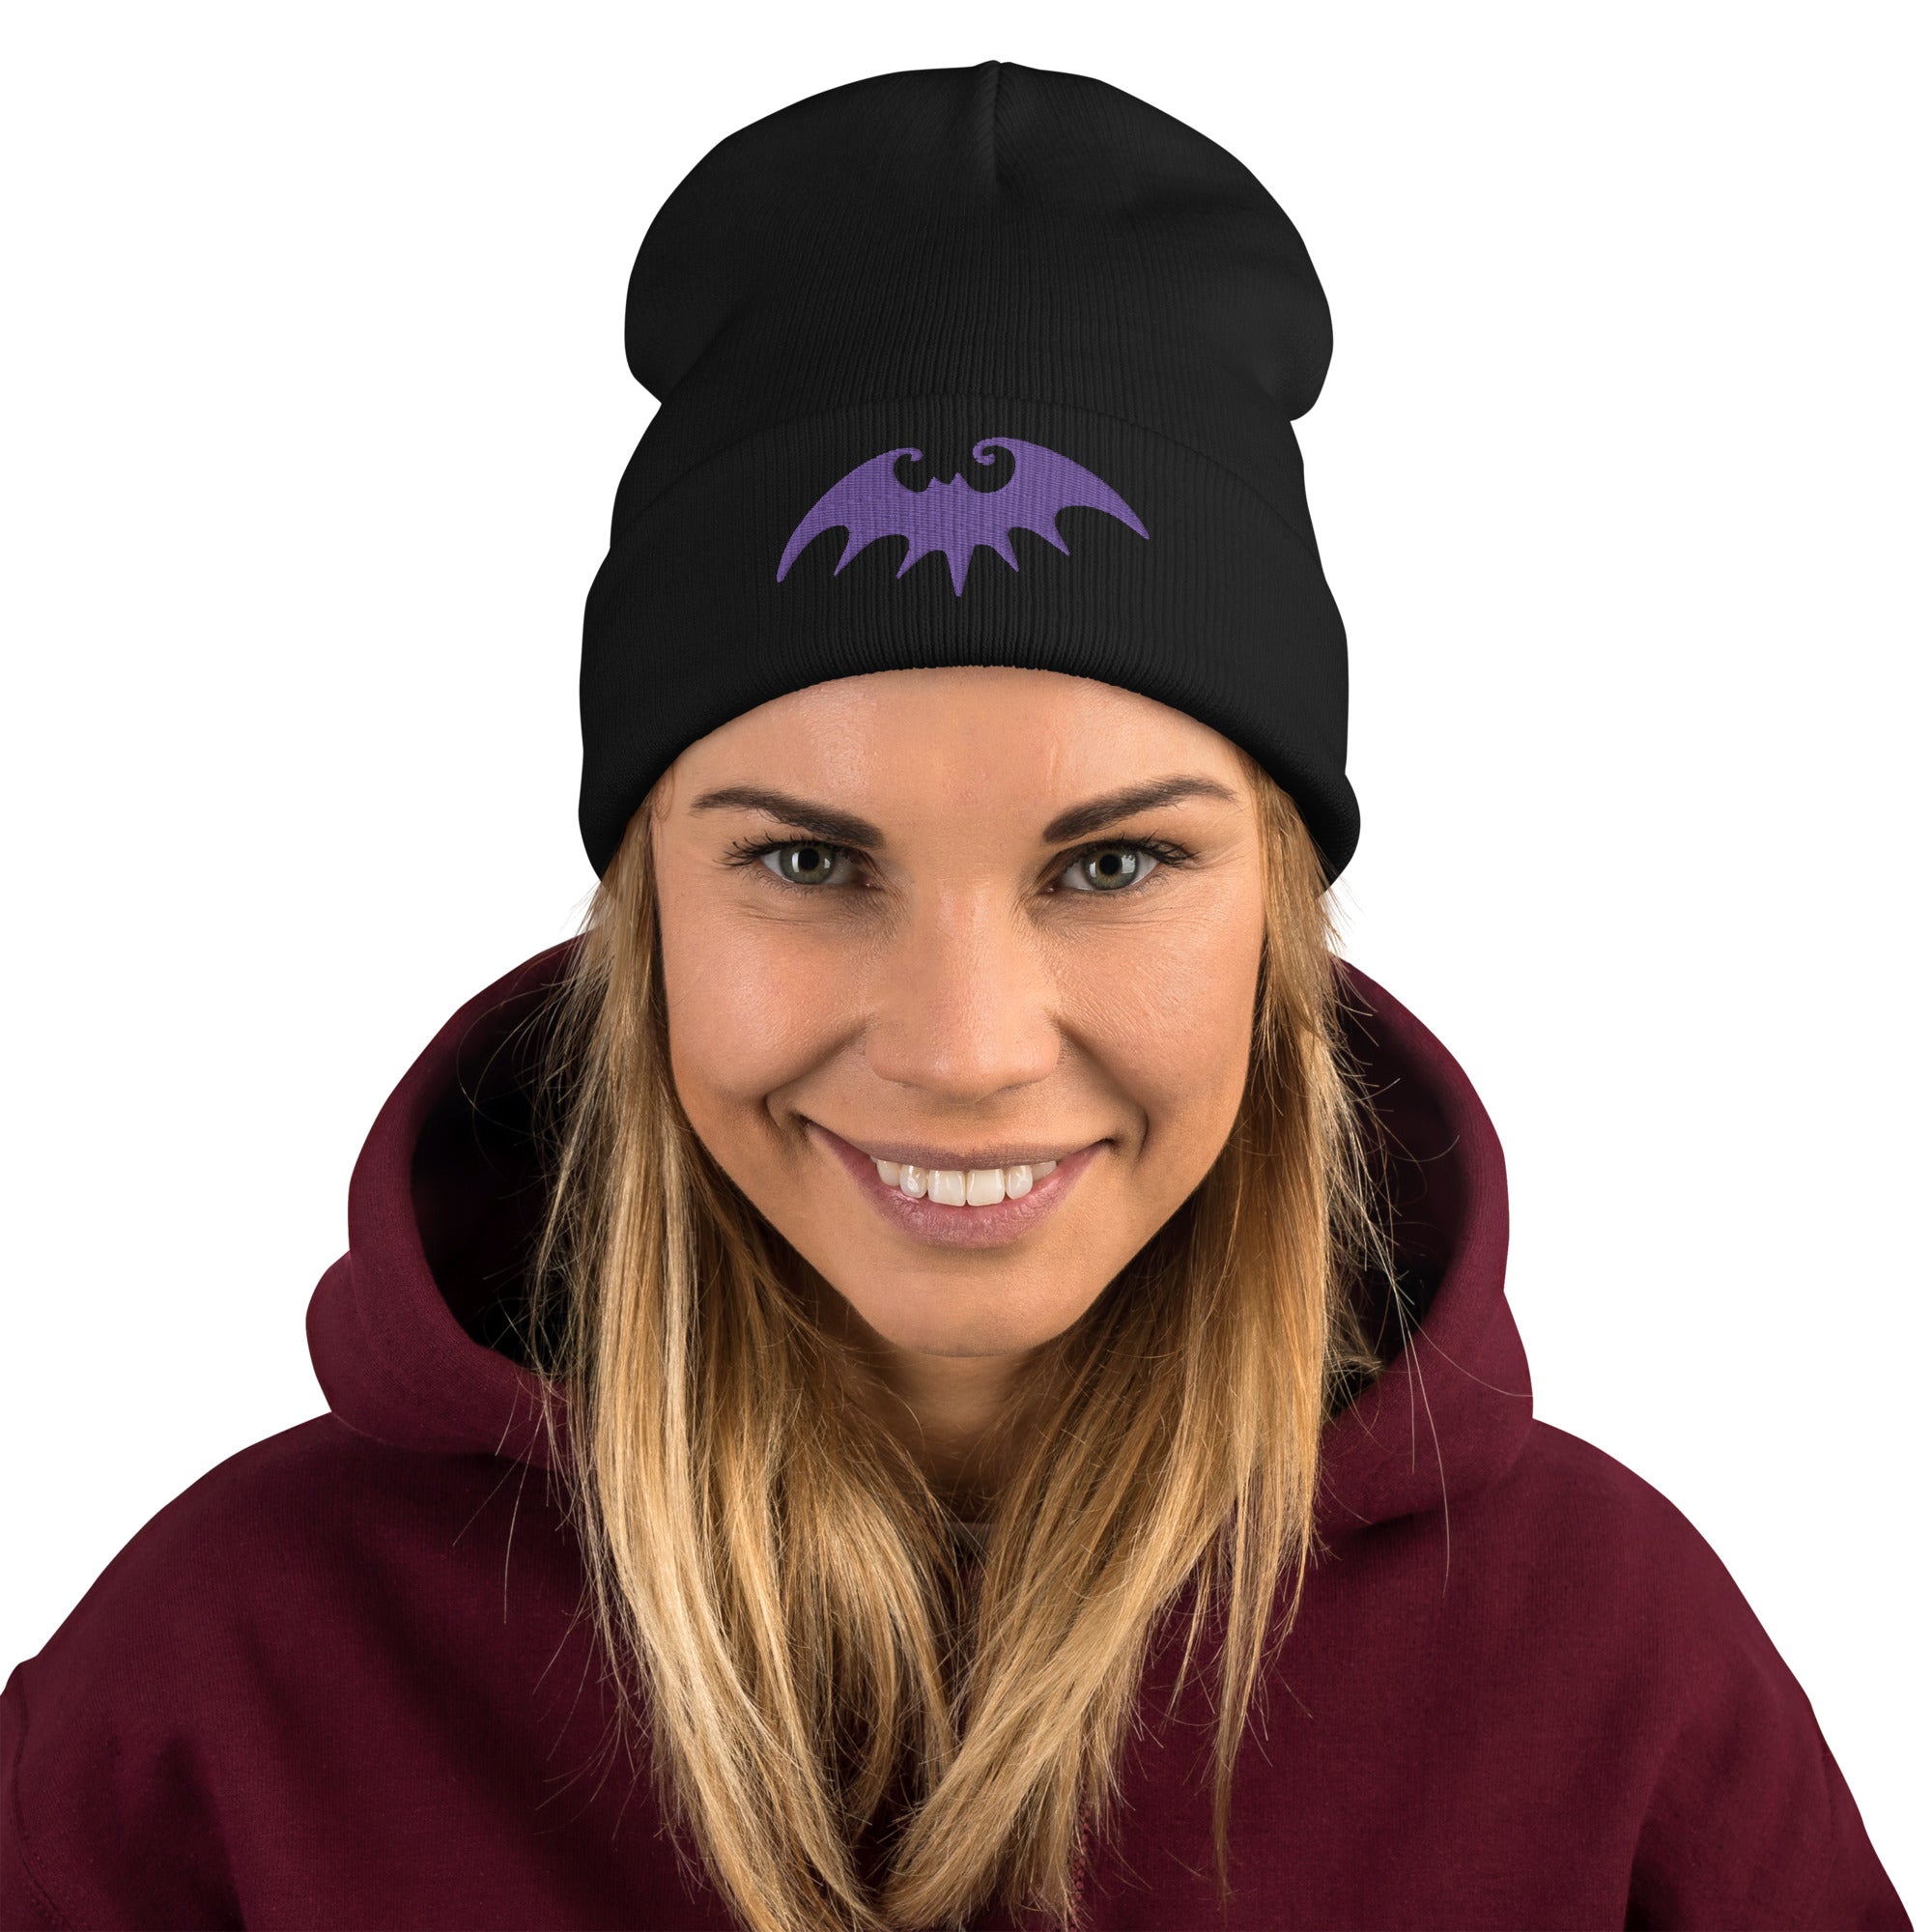 Halloween Gothic Vampire Bat Embroidered Cuff Beanie - Edge of Life Designs